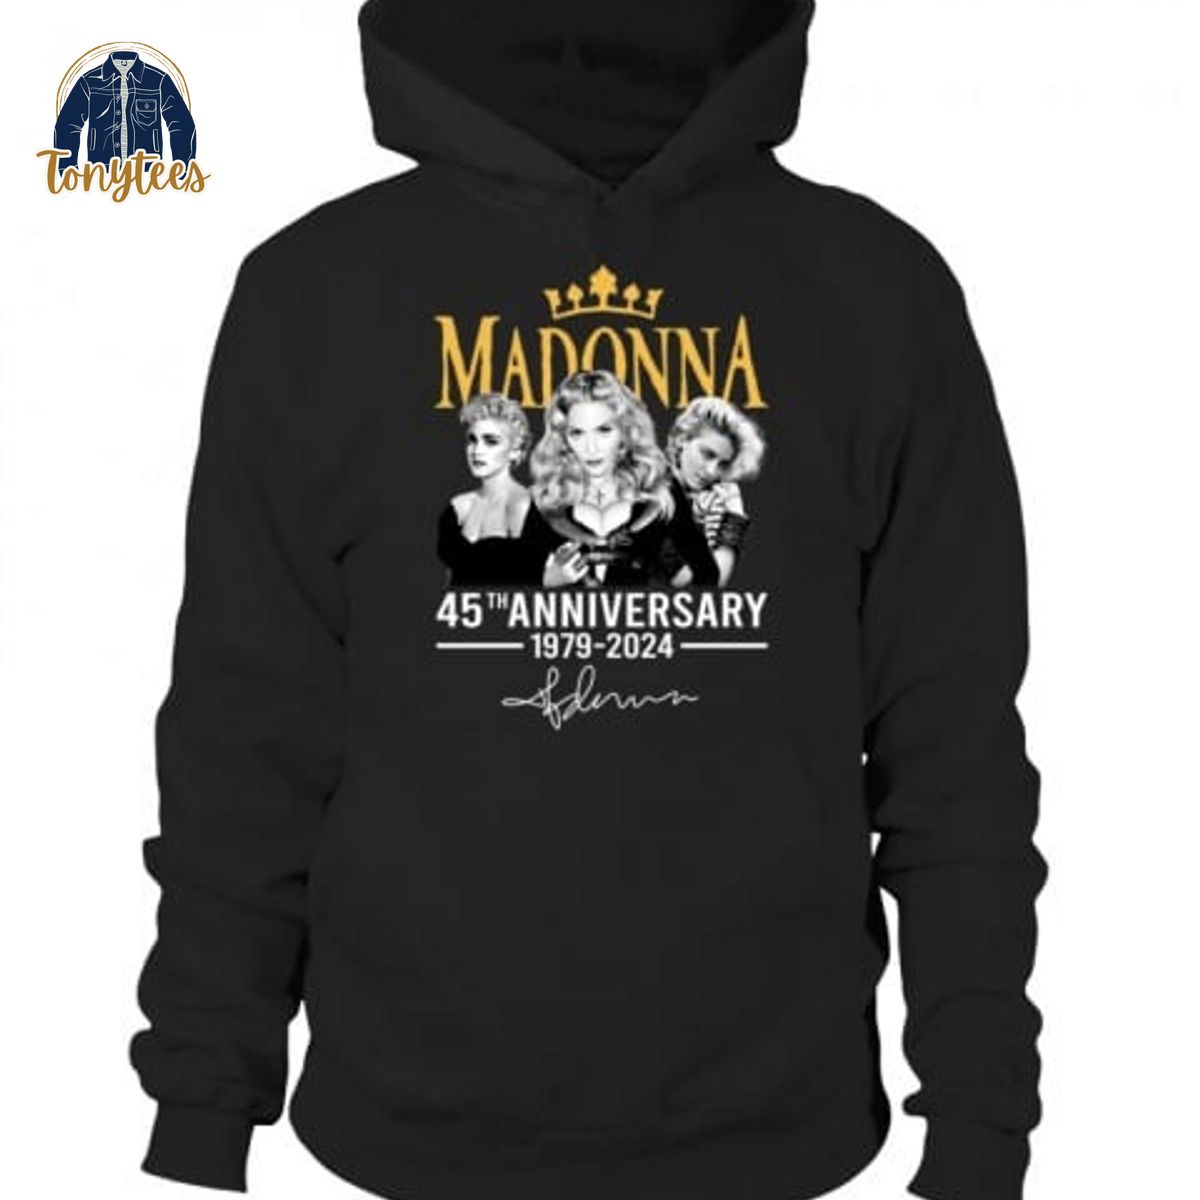 Madonna 45th anniversary 1979 2024 shirt